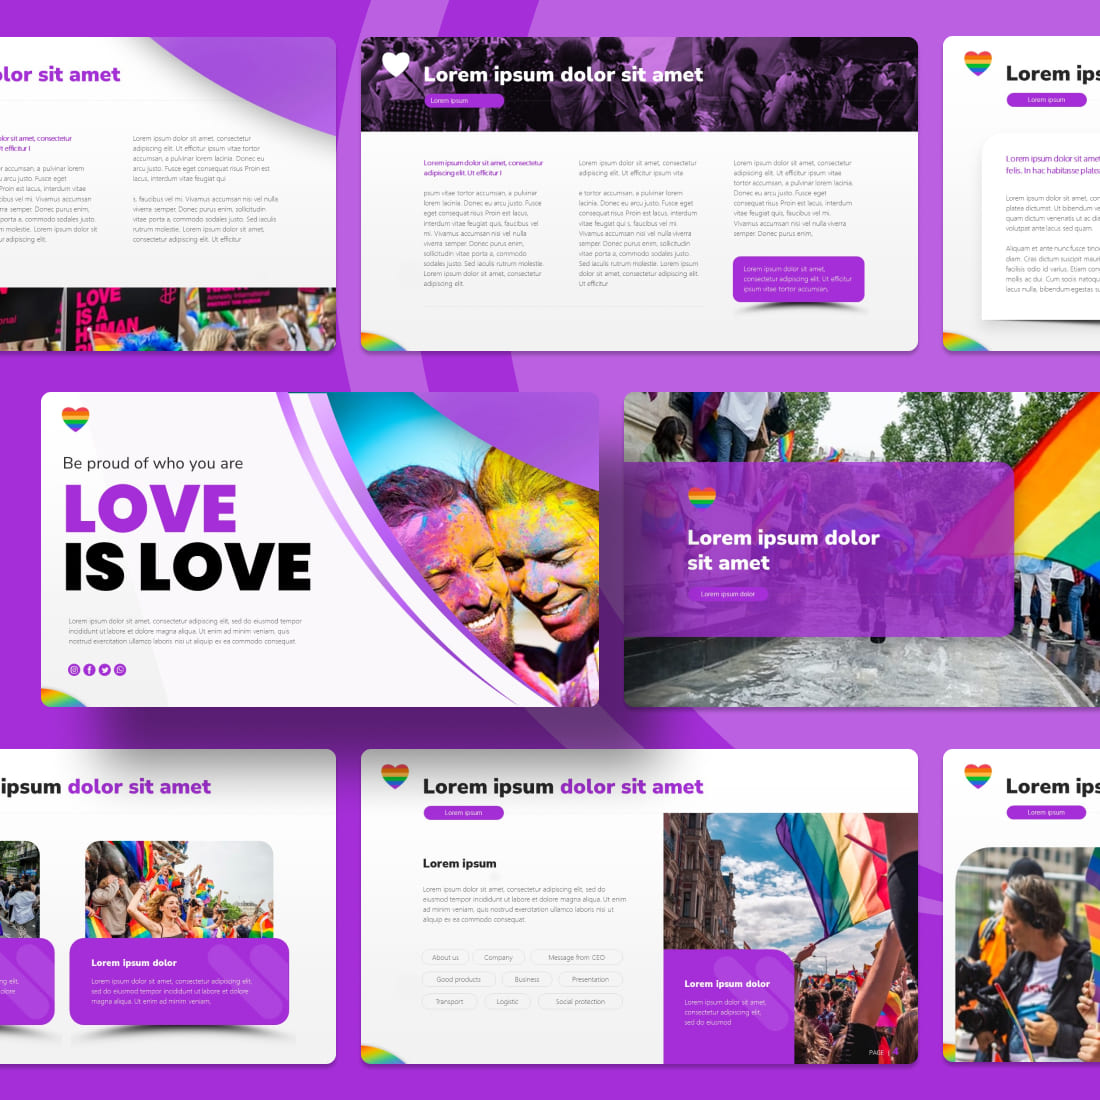 Love is Love LGBT Google Slides Theme cover.